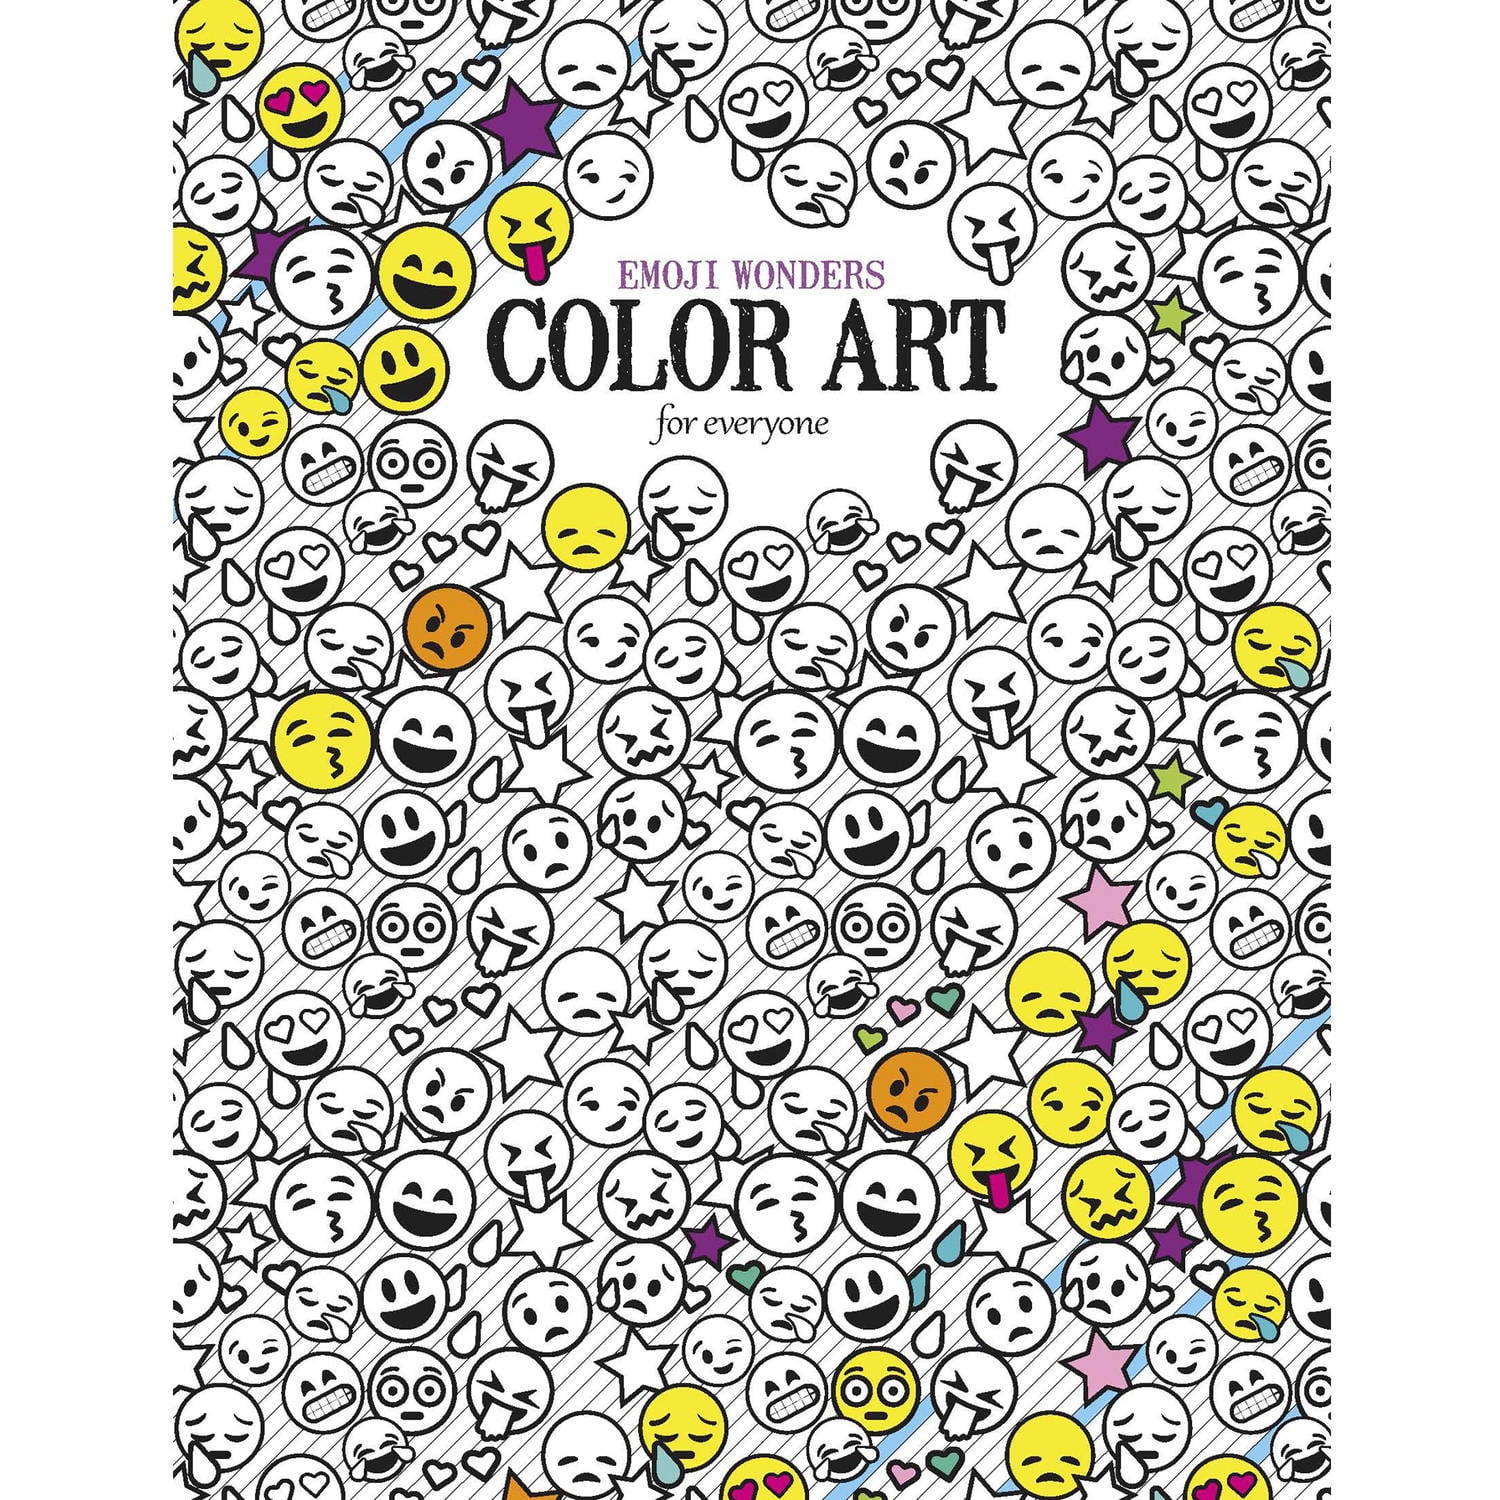 Leisure Arts Color Art Adult Coloring Kit